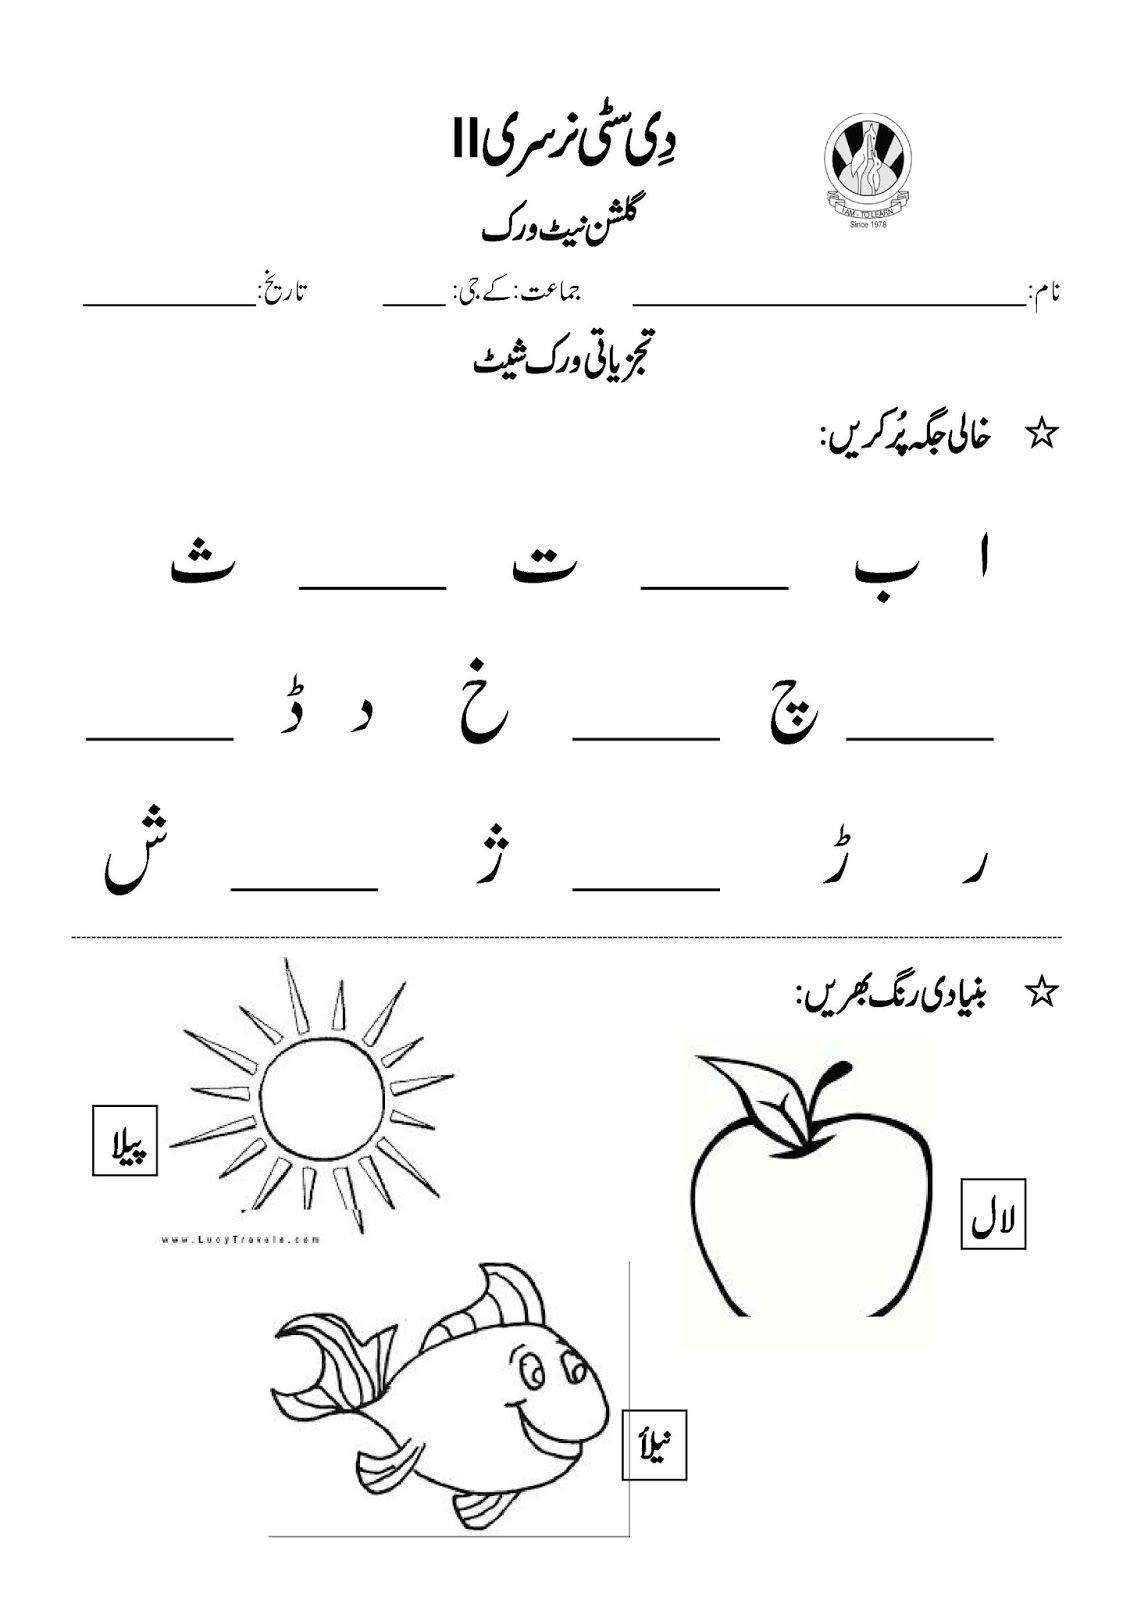 Alphabet Urdu Worksheets Pdf AlphabetWorksheetsFree